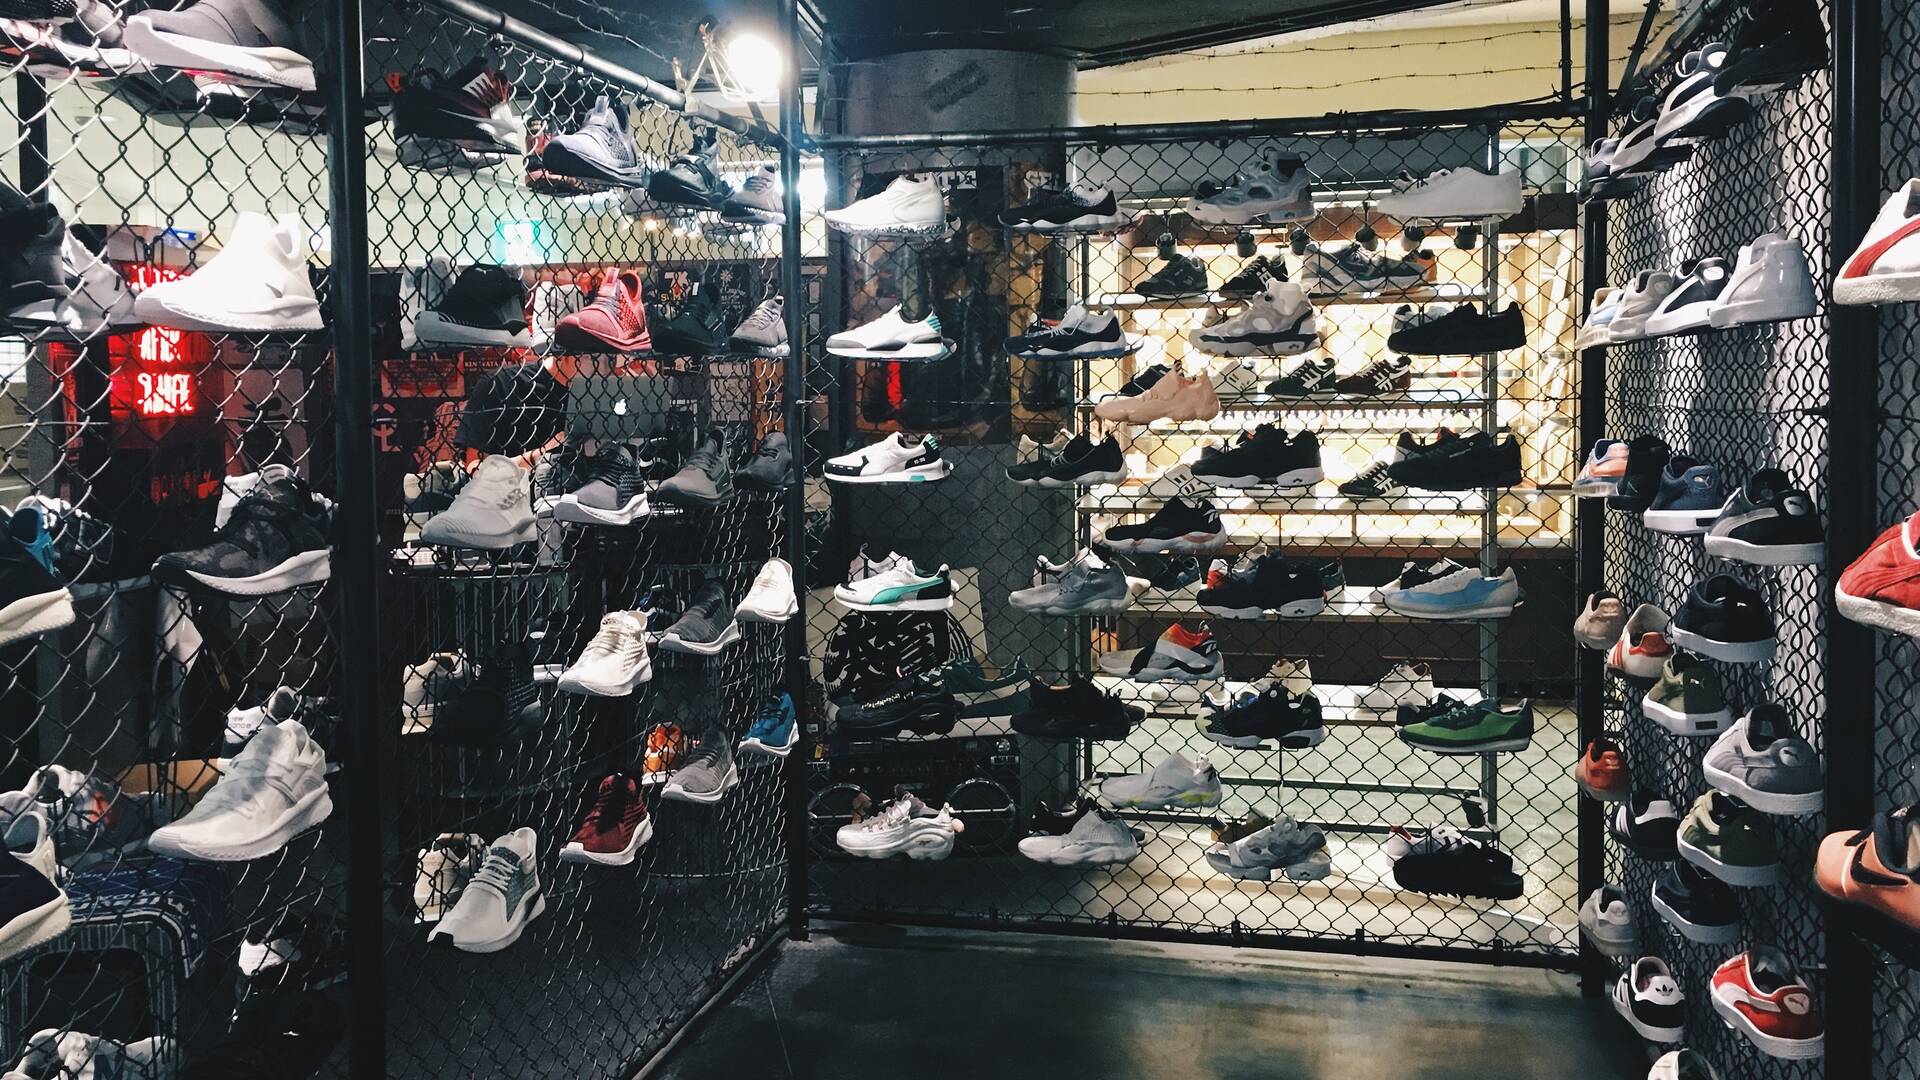 Mita Sneakers | Shopping in Ueno, Tokyo